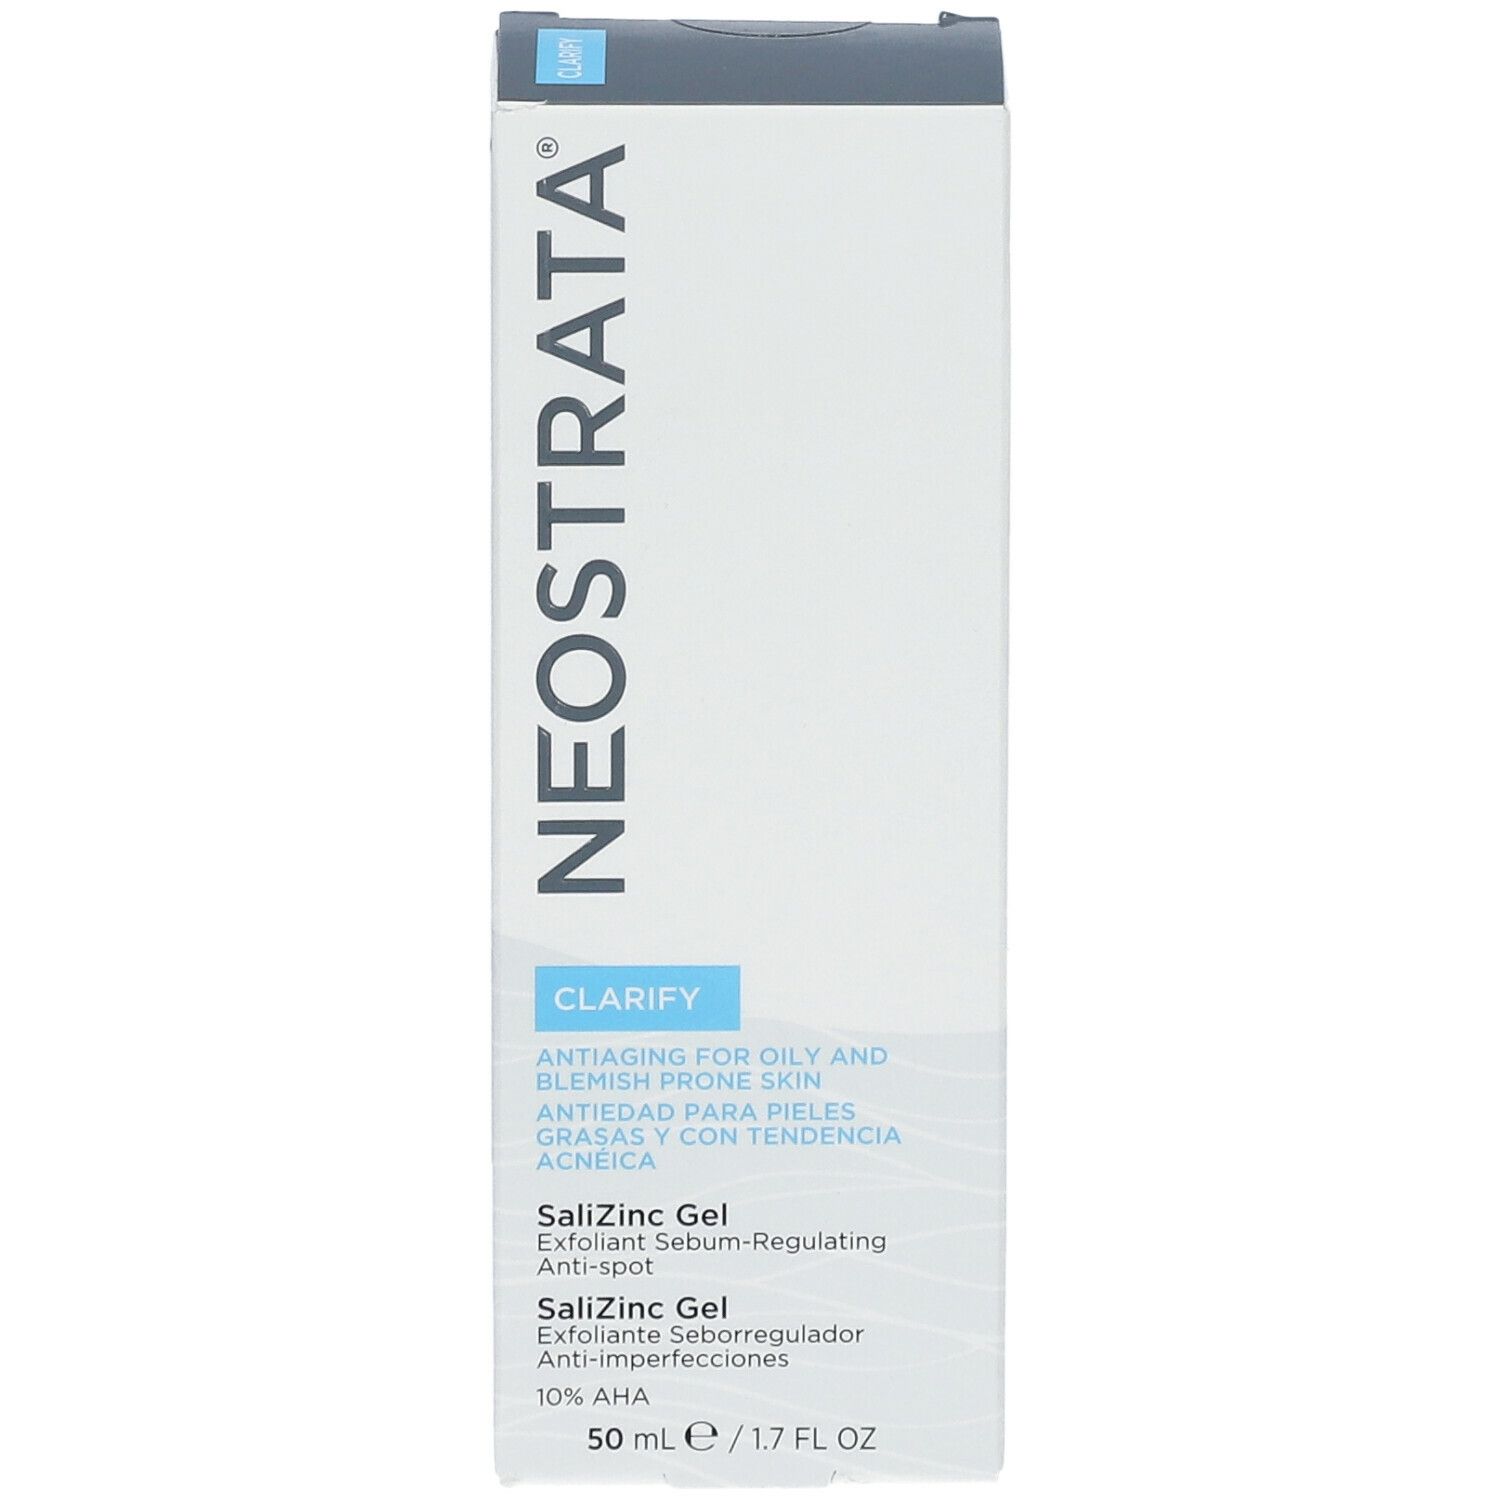 NeoStrata® Clarify SaliZinc Gel 10 AHA